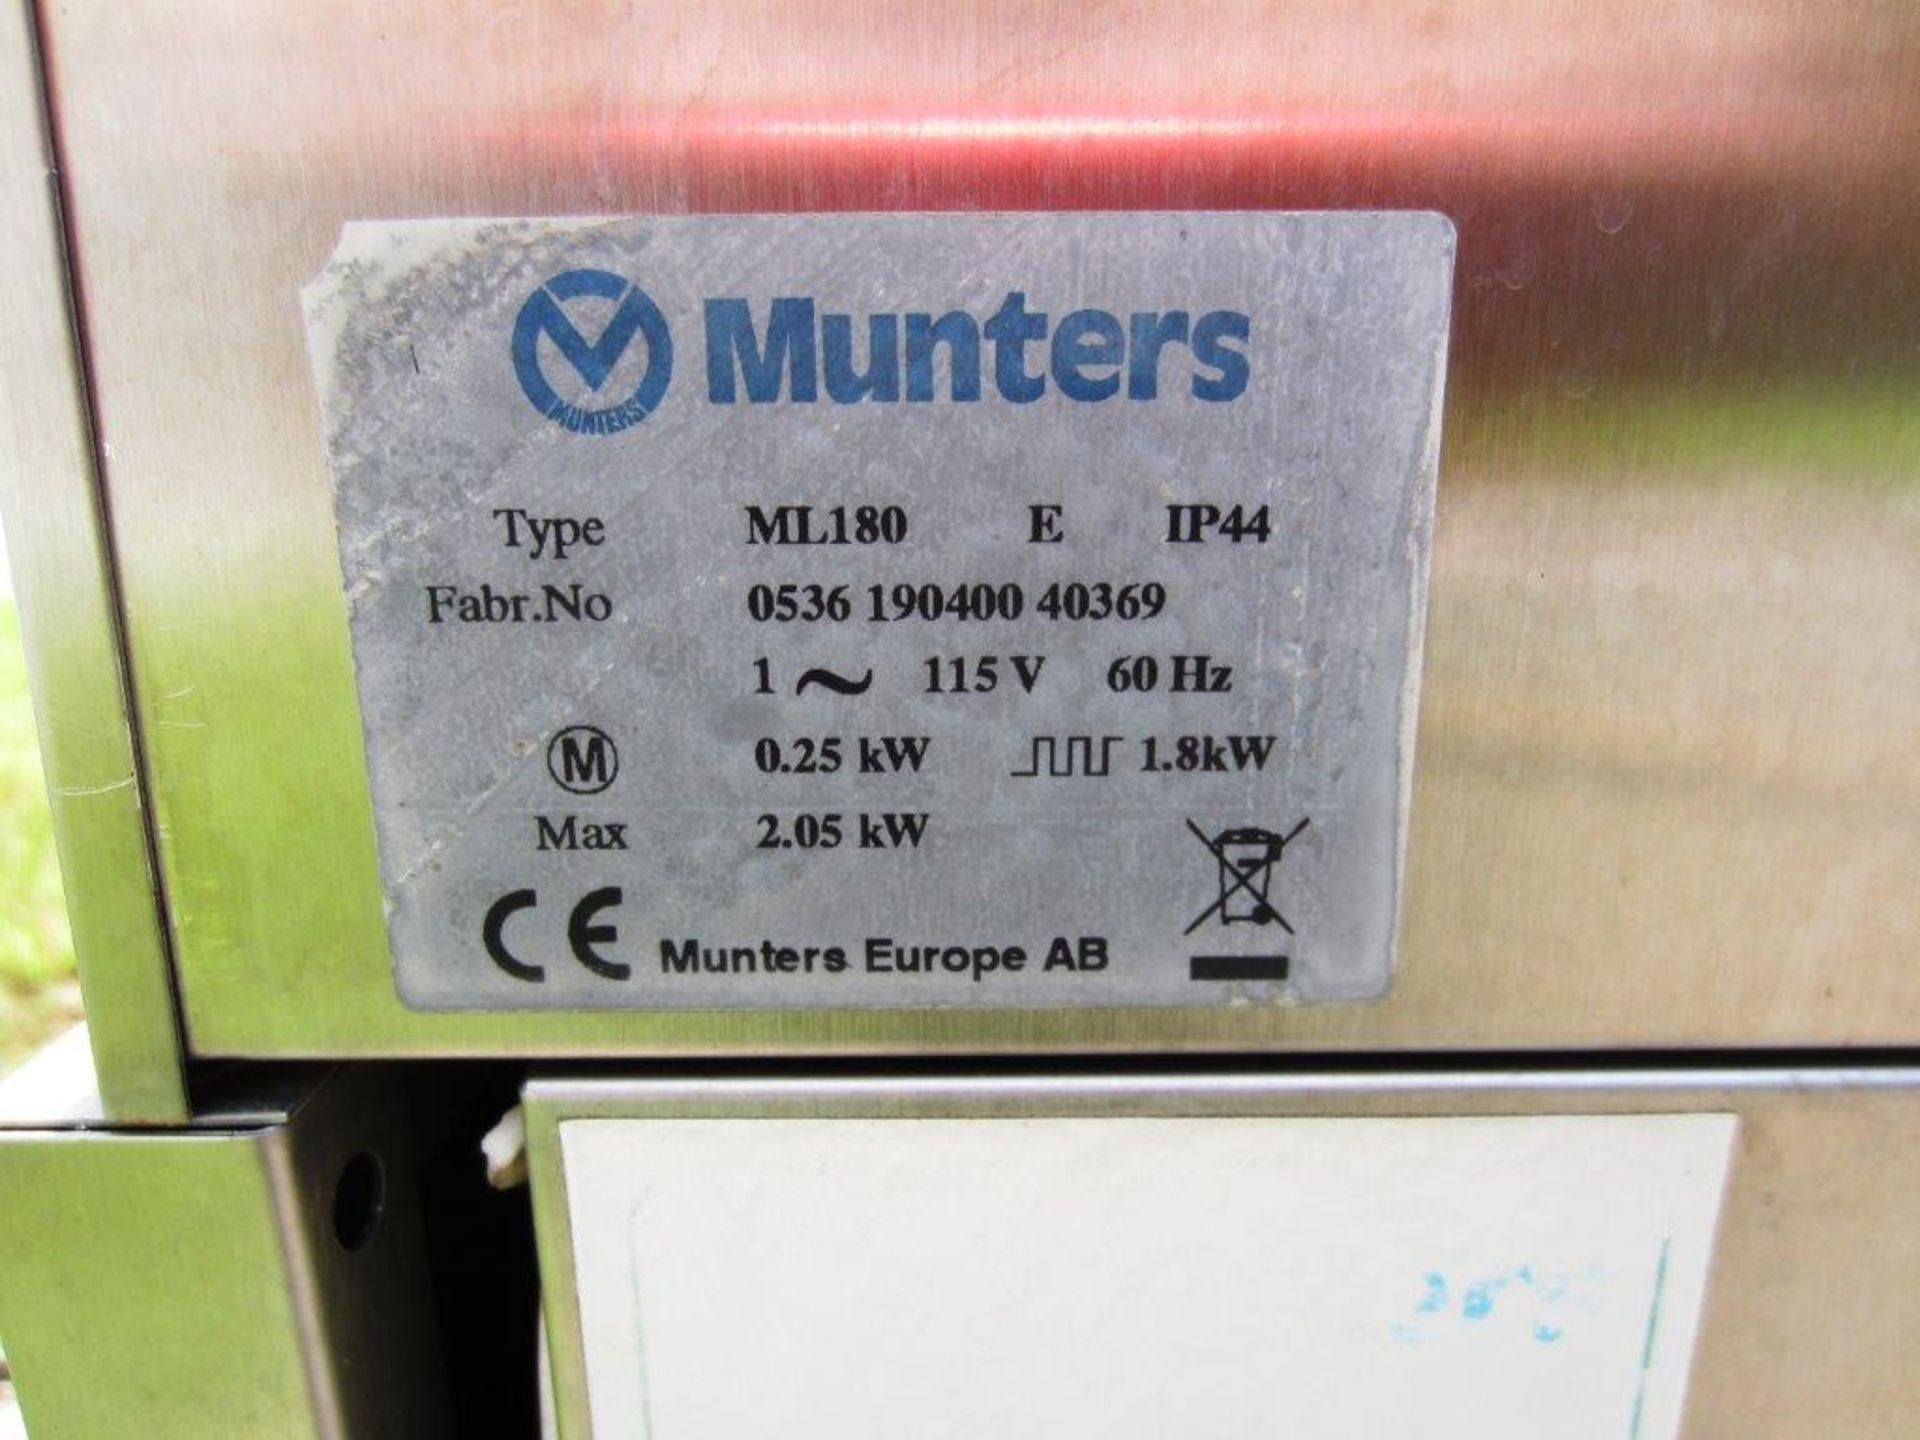 Munters Model MC-013 Dehumidification System For Blowmolder, S/N: OCO1219-01 | Load Fee: $100 - Image 3 of 3